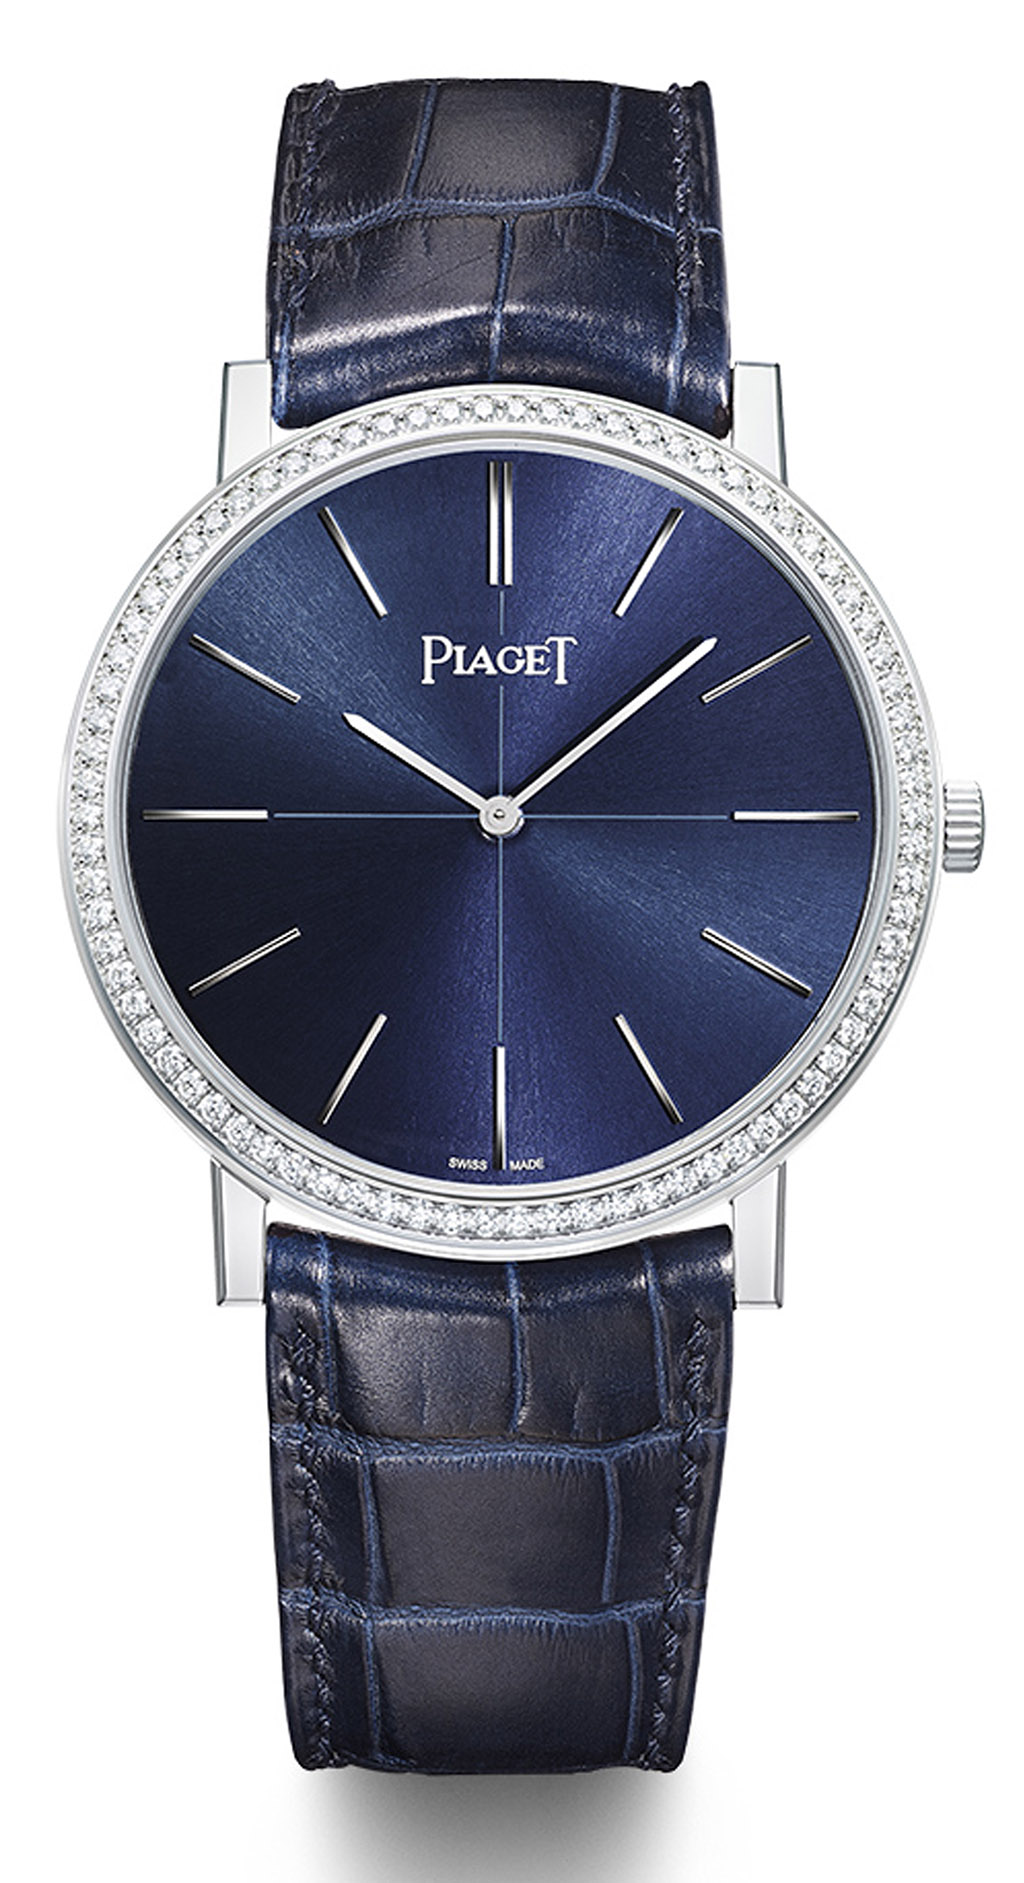 Piaget Altiplano 60 週年紀念版懷表及鑲鑽腕表 腕表發佈 